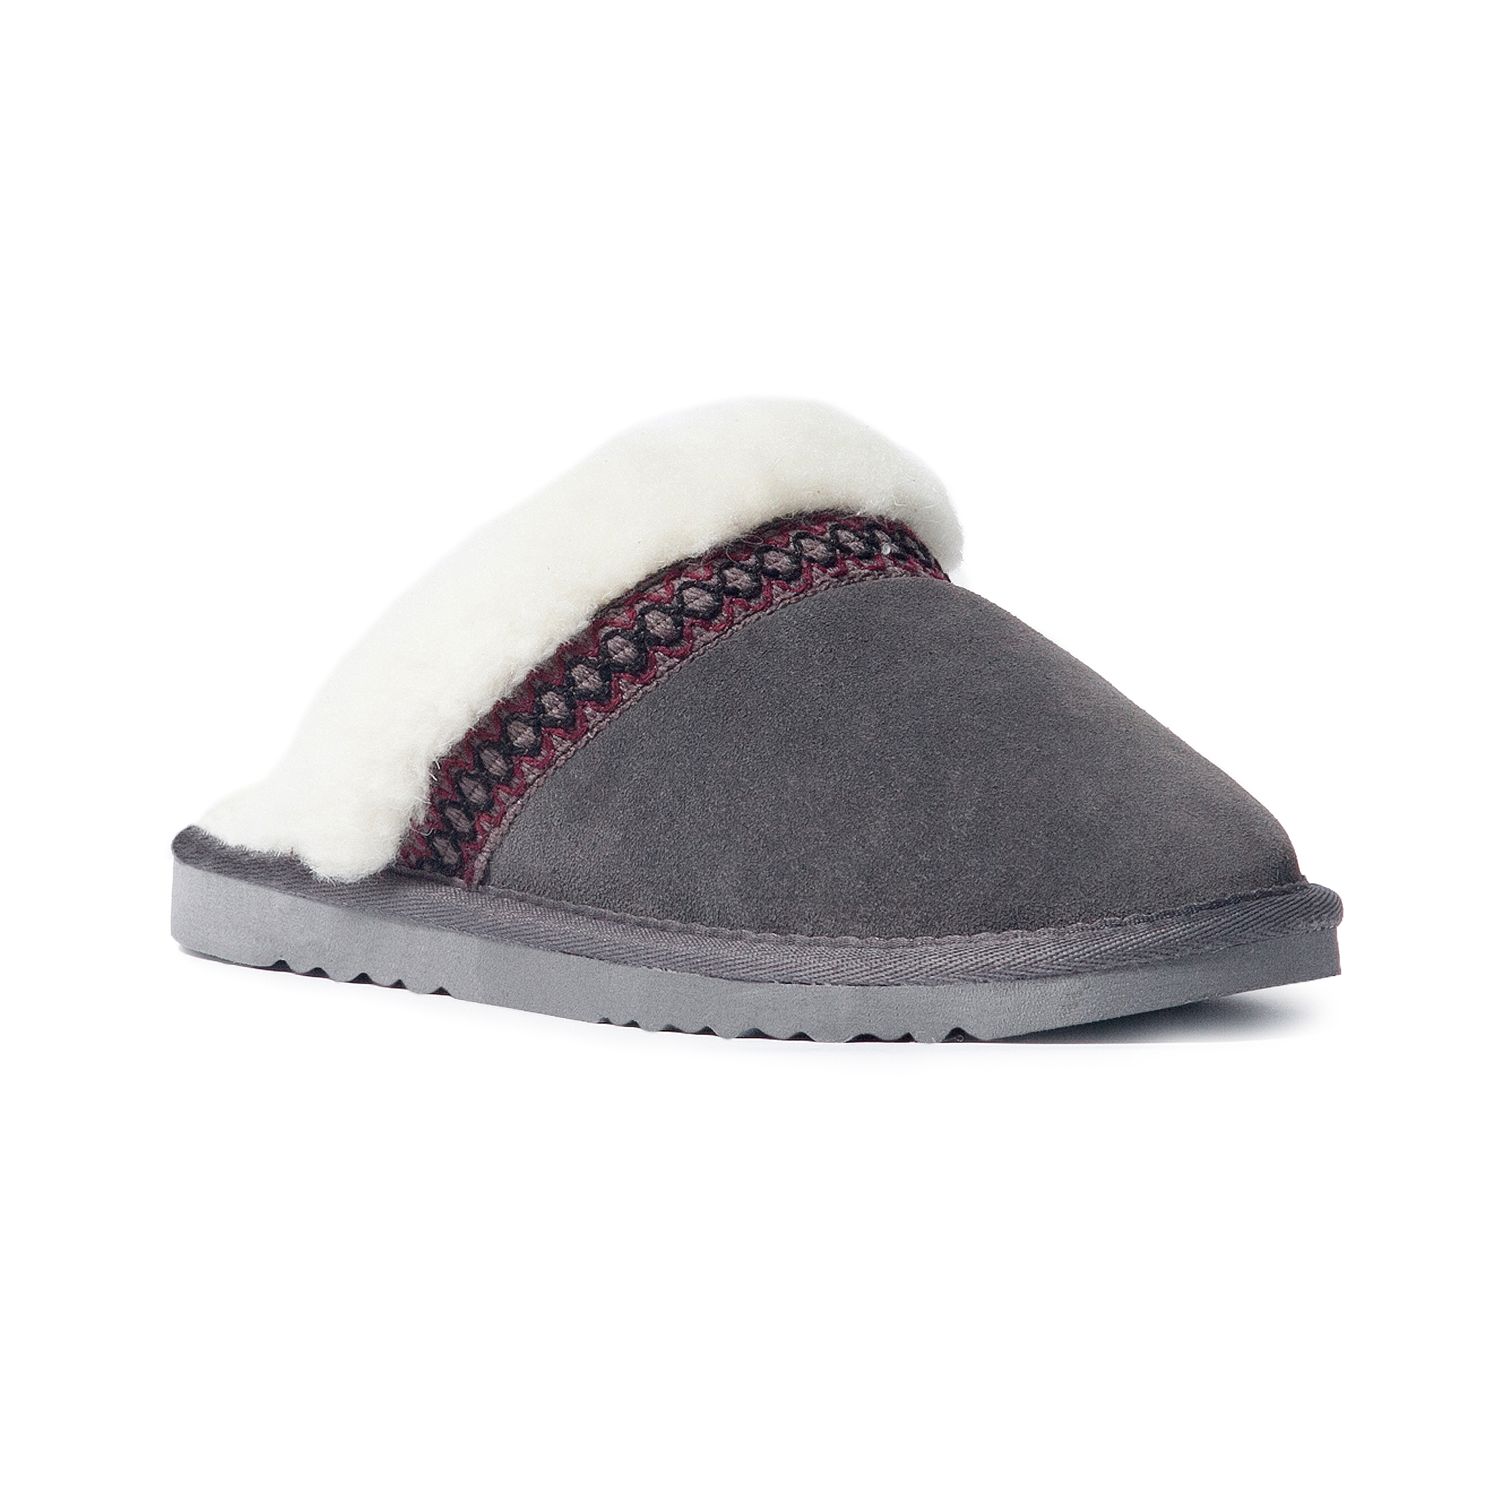 koolaburra by ugg women's milo scuff slipper